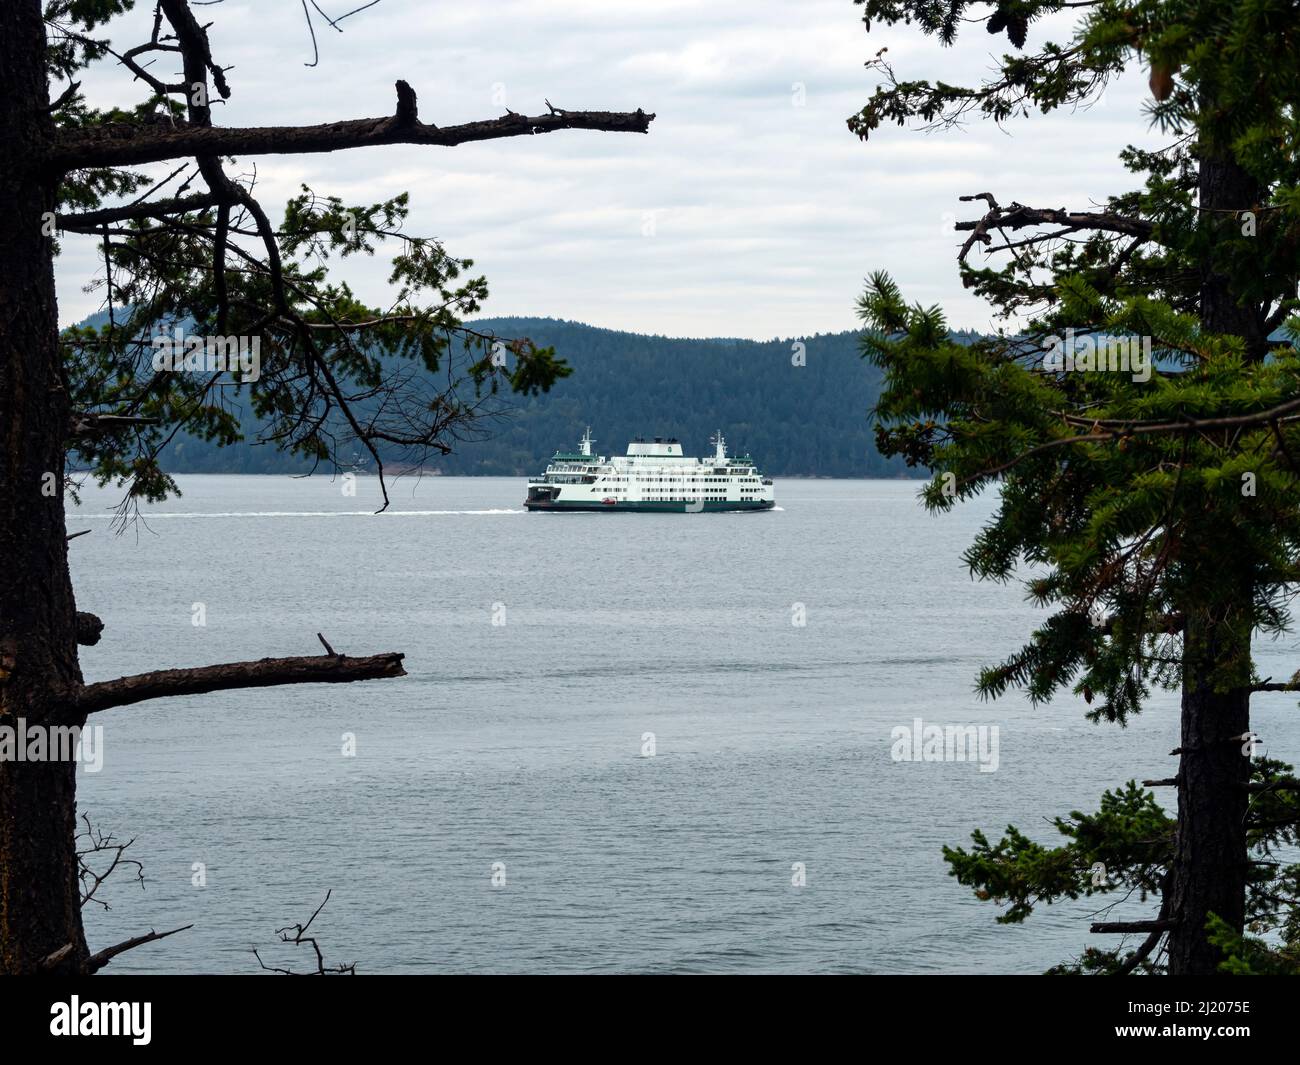 WA21203-00...WASHINGTON - A Washington State ferry passing Upright Head Preserve on Lopez Island. Stock Photo